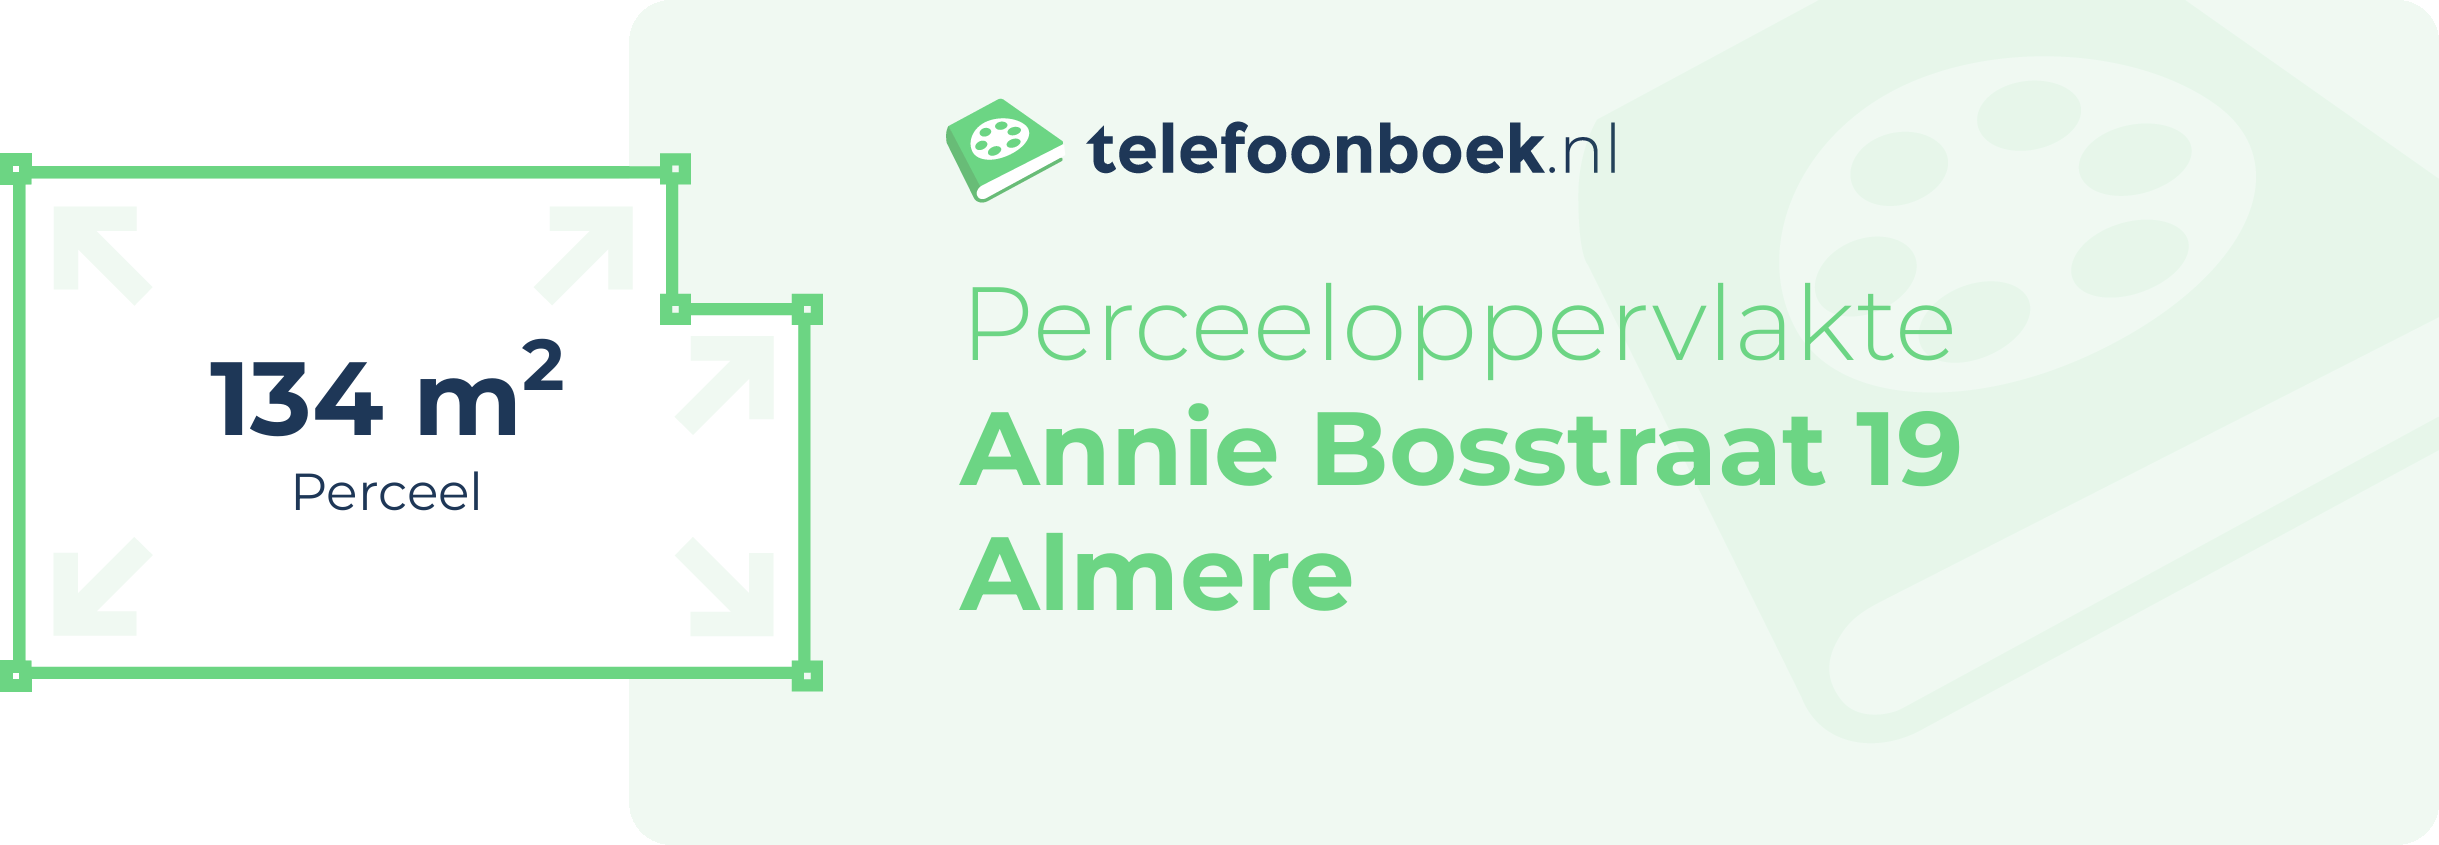 Perceeloppervlakte Annie Bosstraat 19 Almere